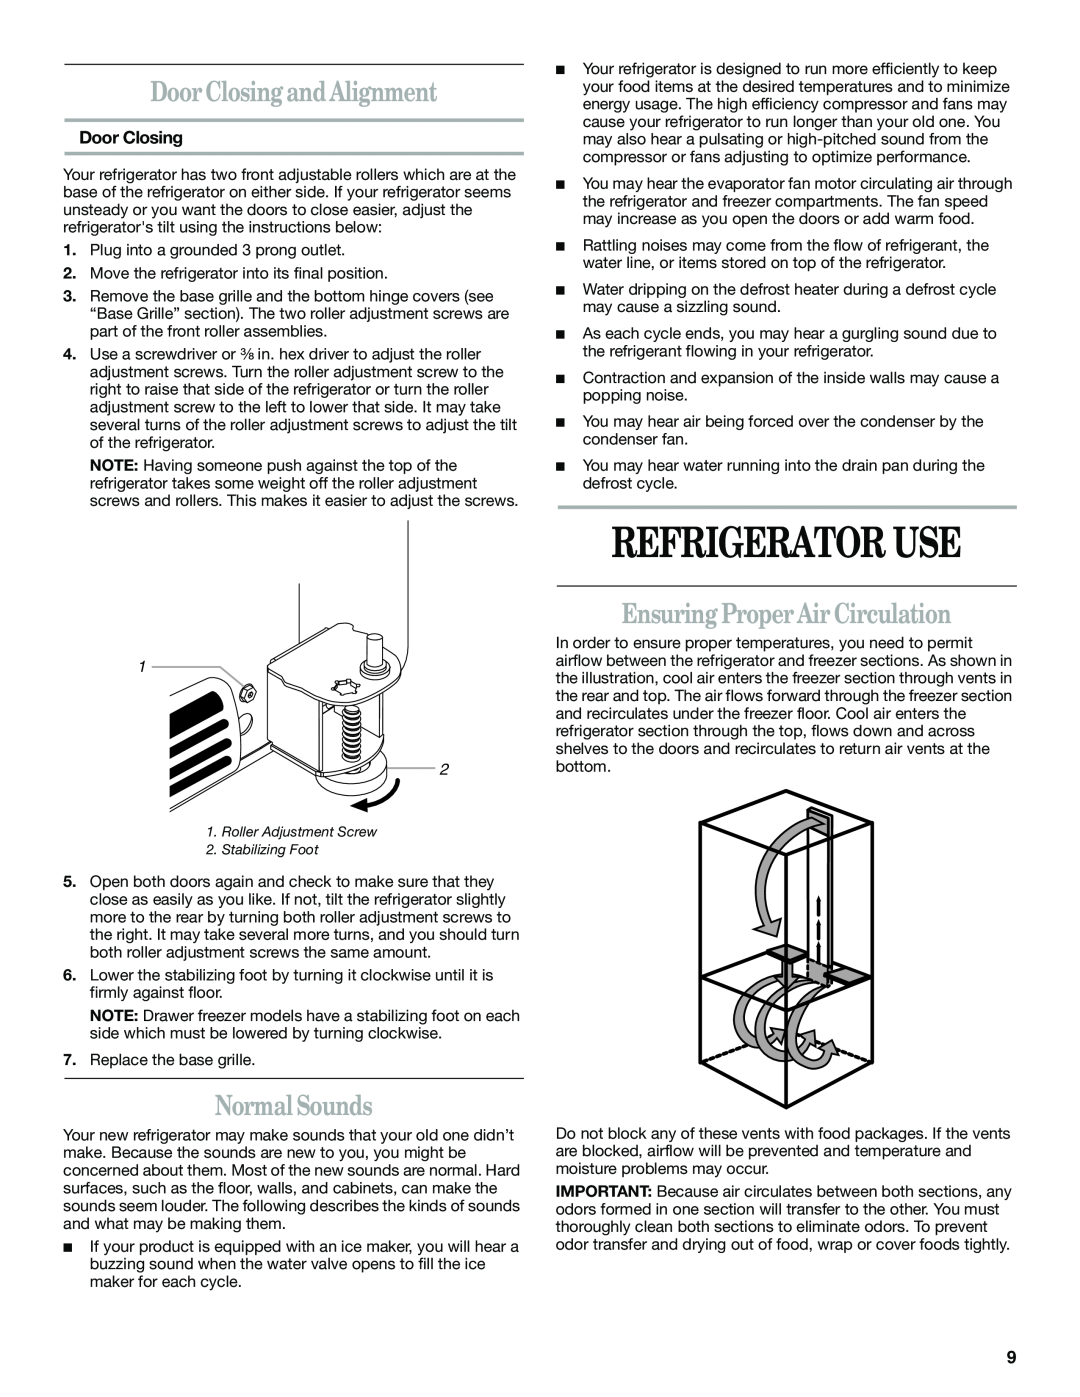 Whirlpool GB2SHKLLS00 manual Refrigerator Use, Door Closing and Alignment, Normal Sounds, Ensuring Proper Air Circulation 